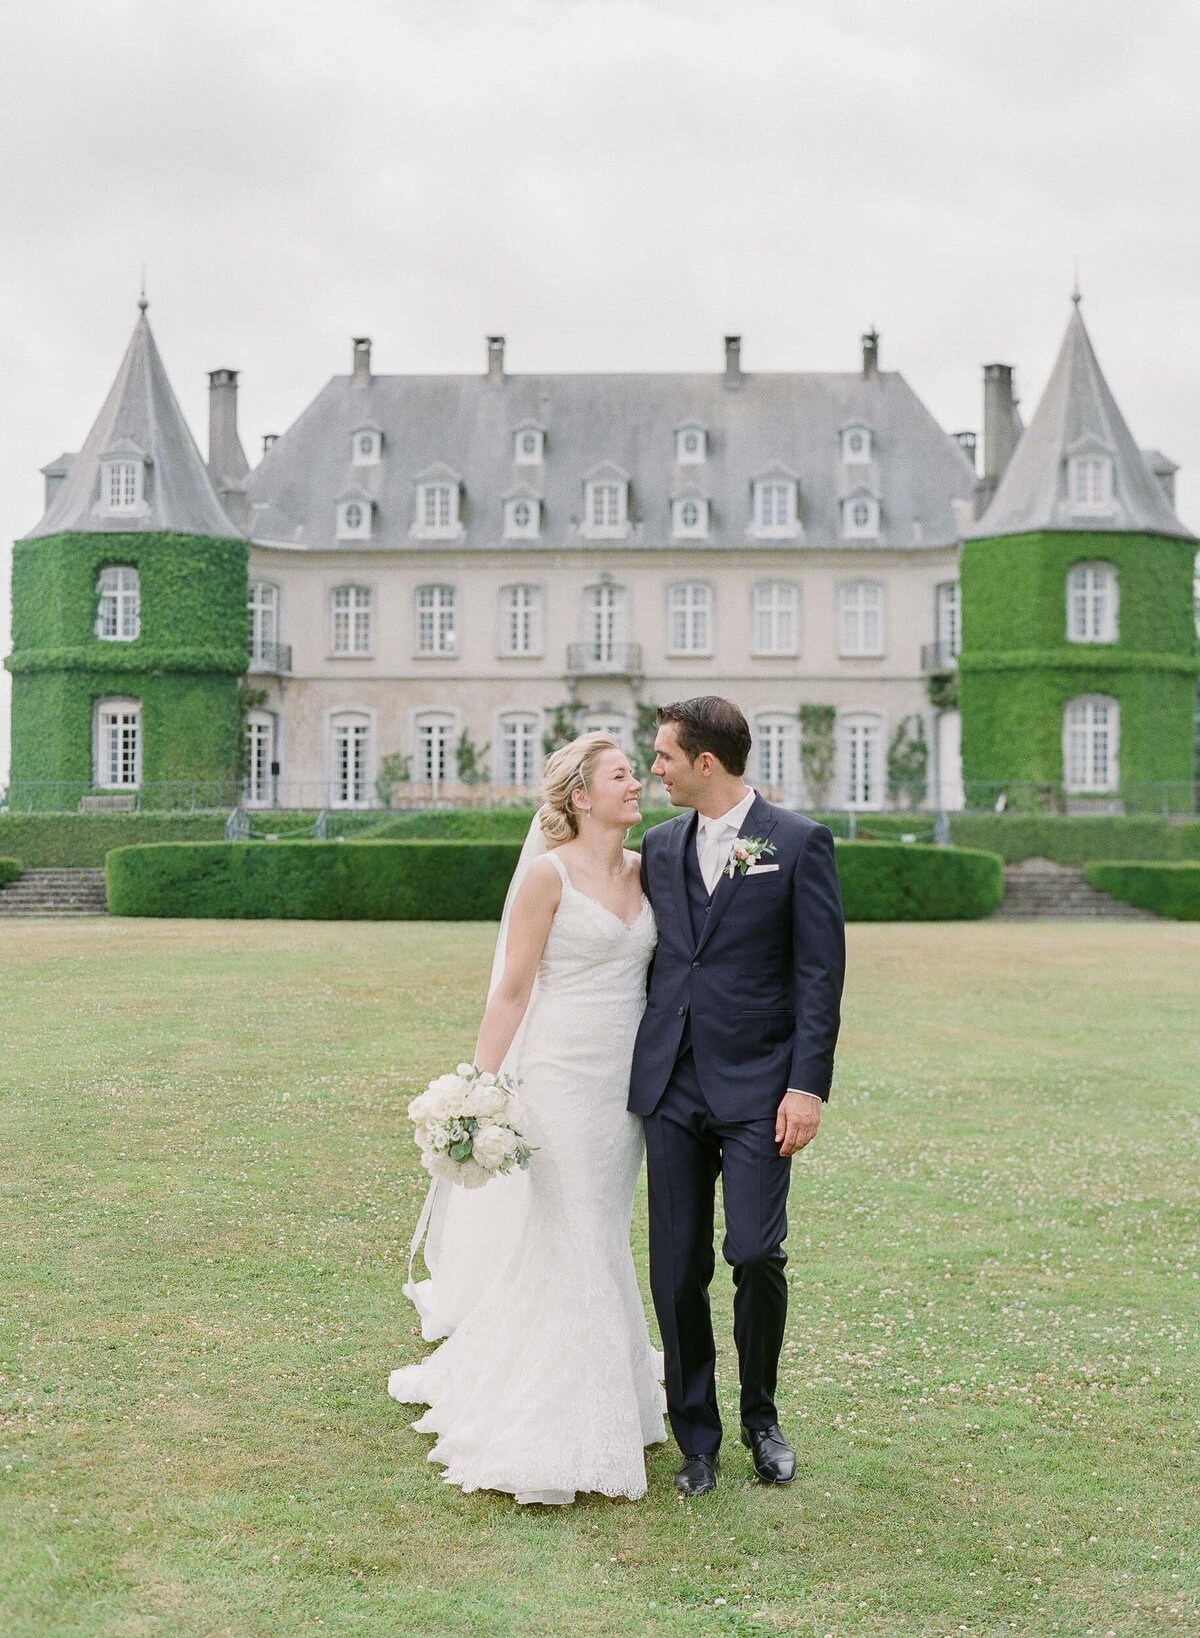 17-Alexandra-Vonk-photography-Chateau-de-la-hulpe-wedding-portraits